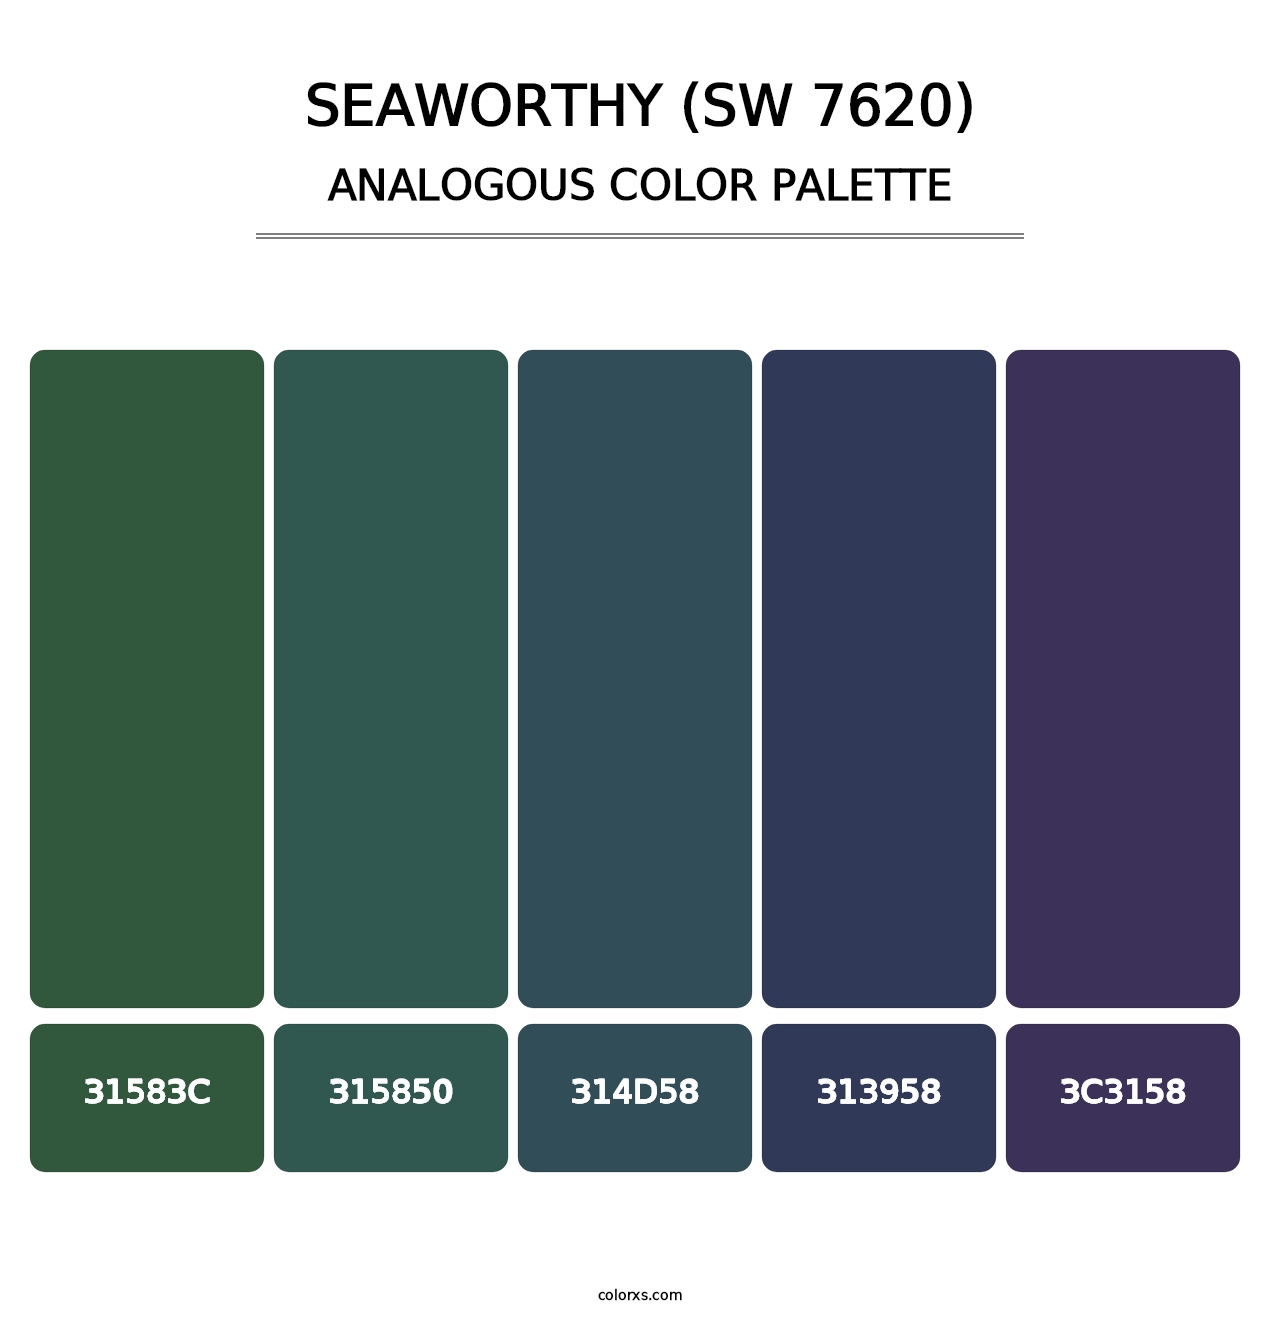 Seaworthy (SW 7620) - Analogous Color Palette